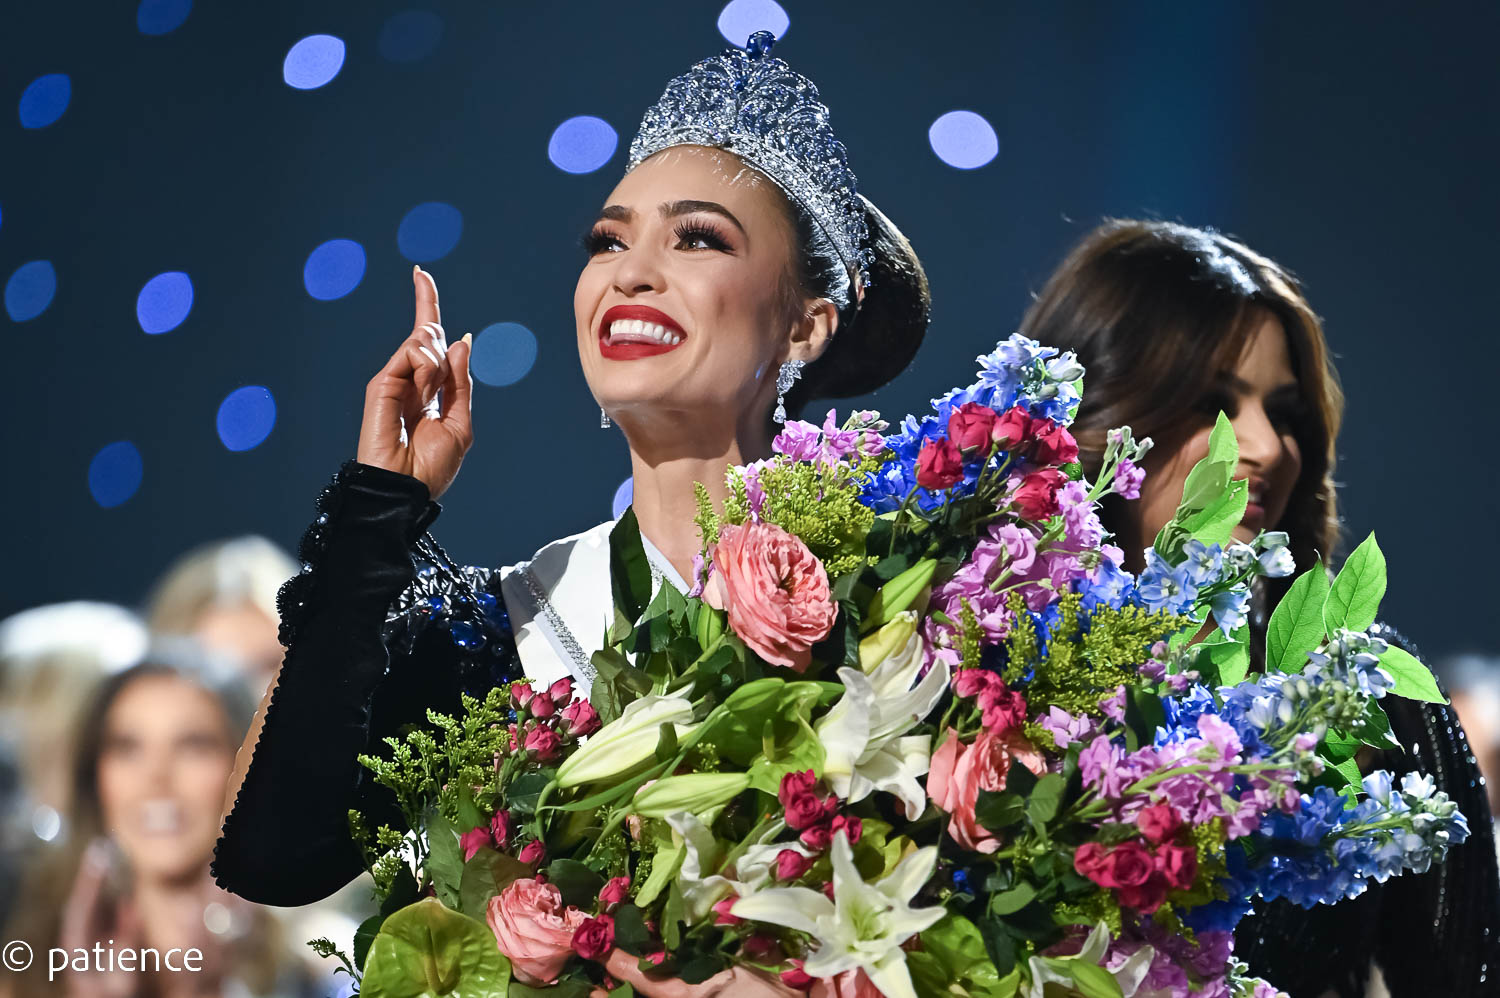 Miss USA R’Bonney Gabriel crowned Miss Universe